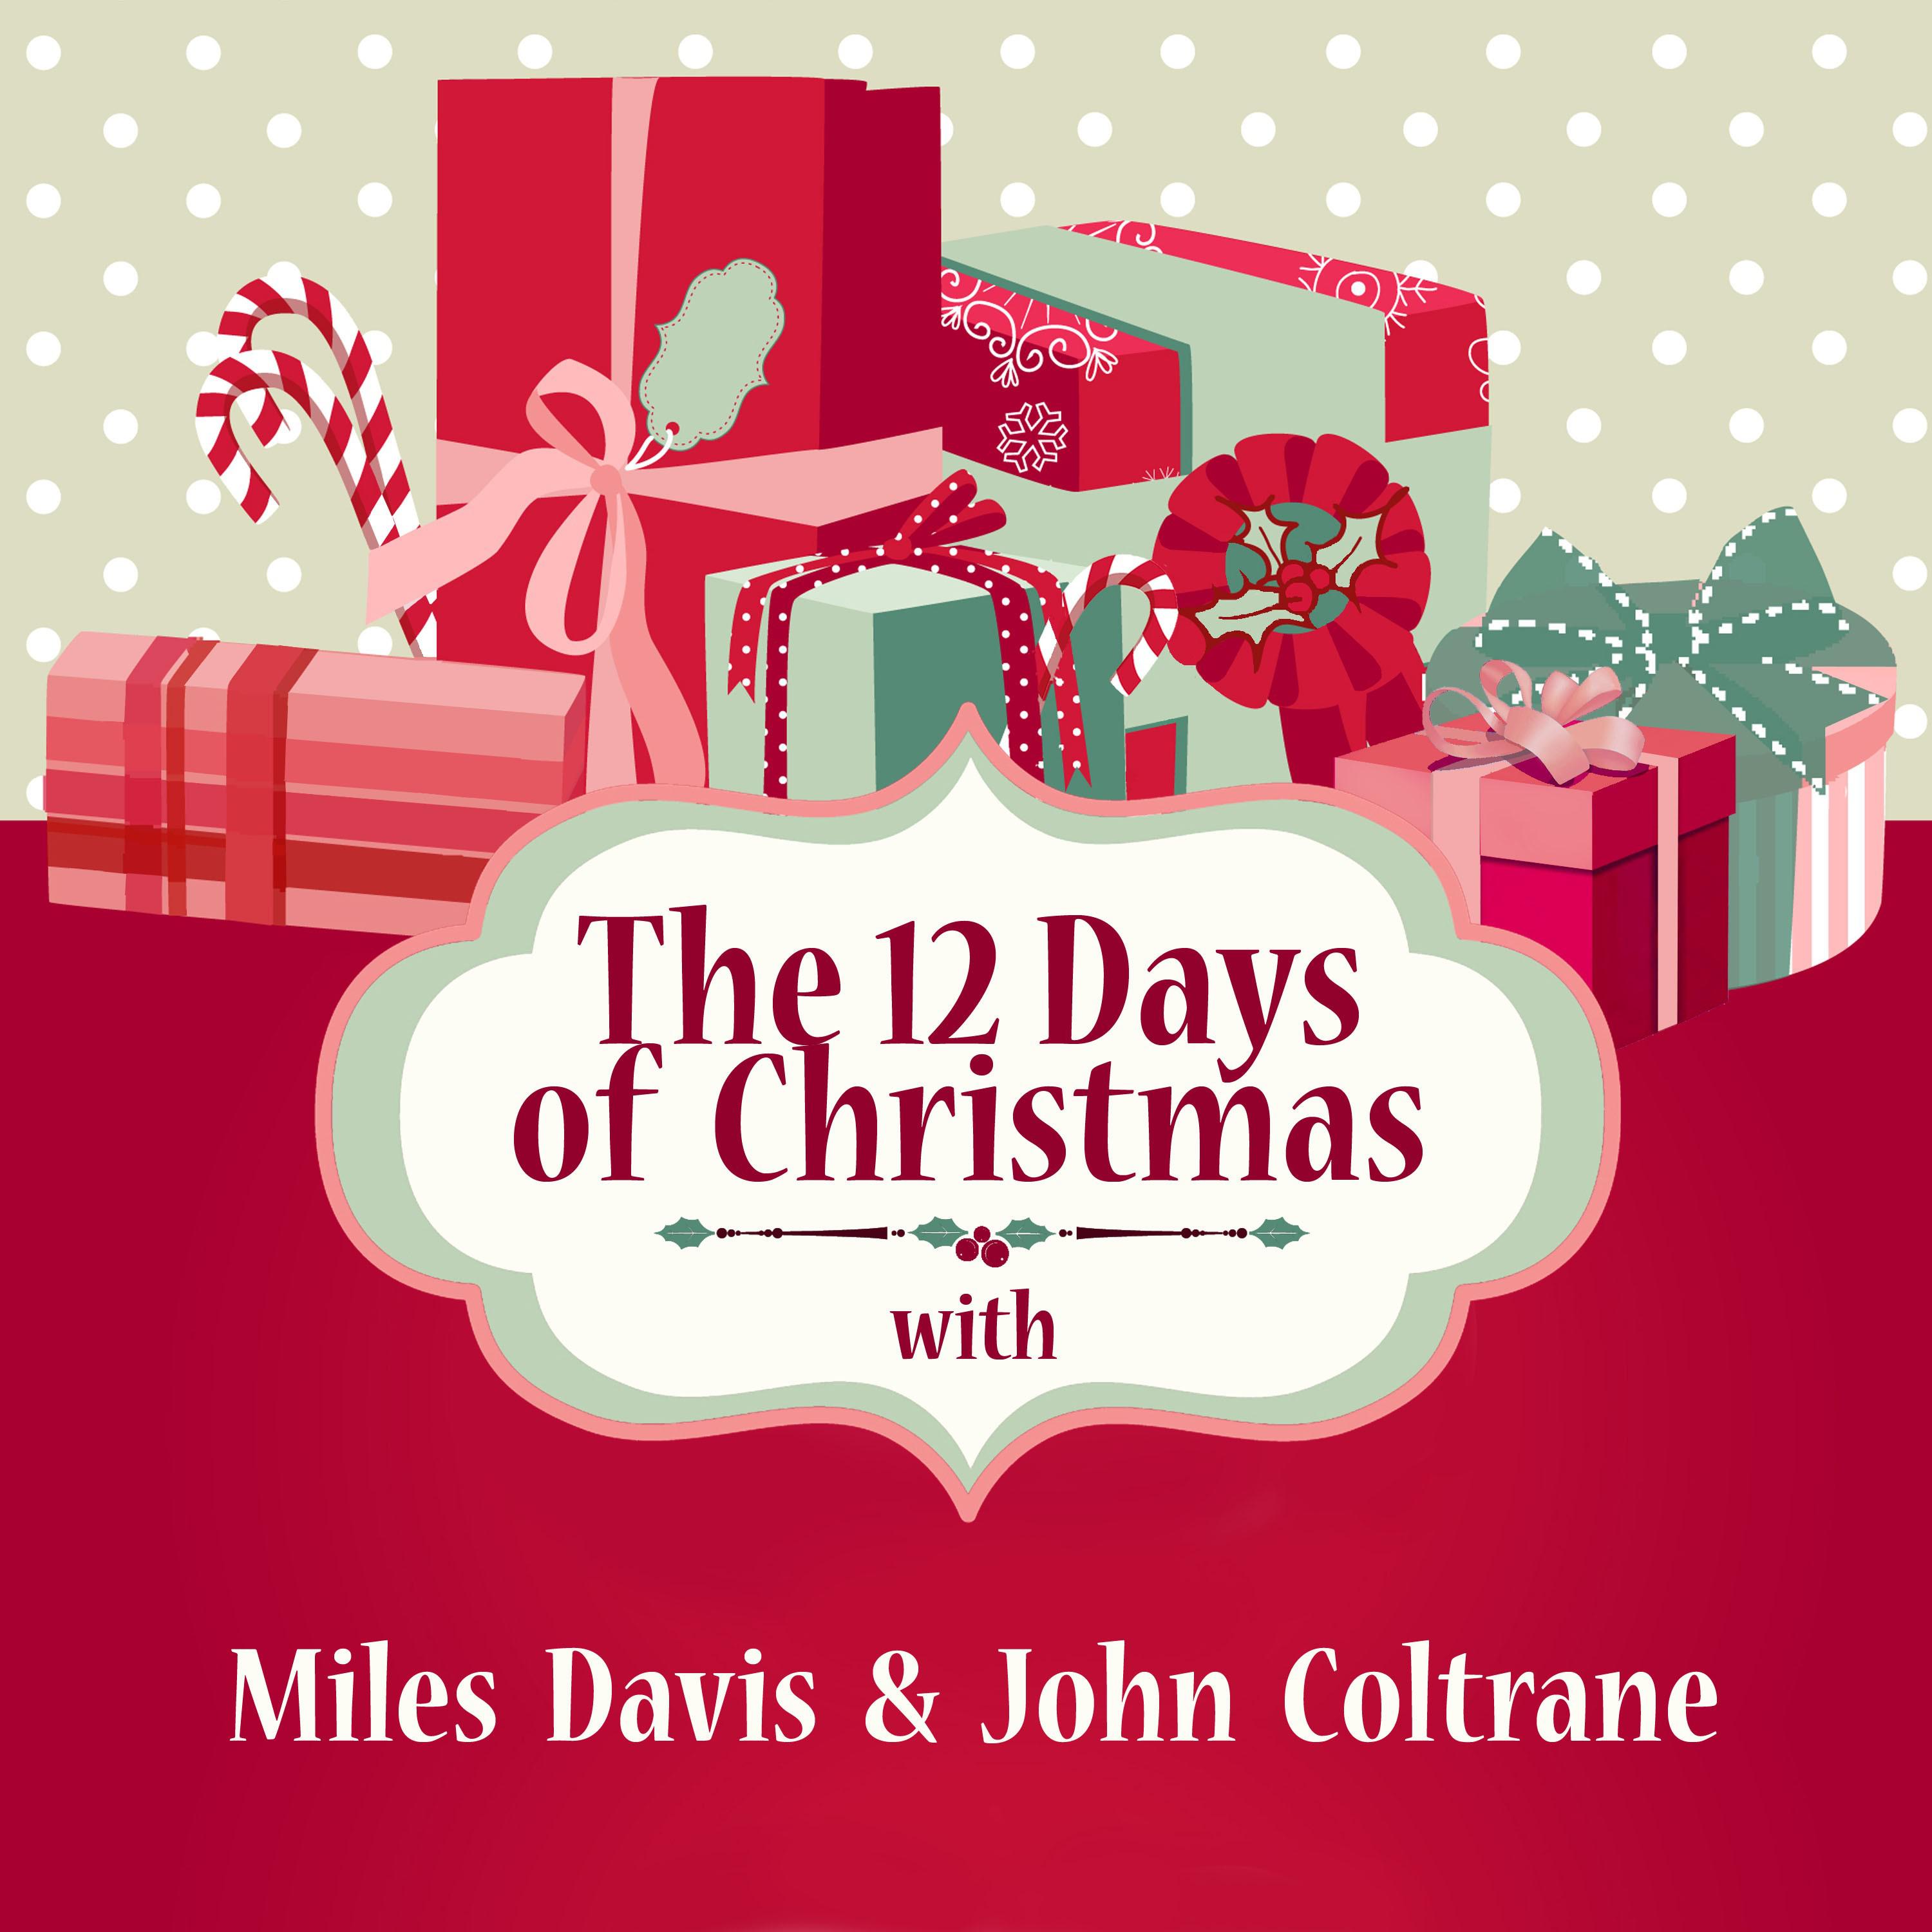 The 12 Days of Christmas with Miles Davis & John Coltrane